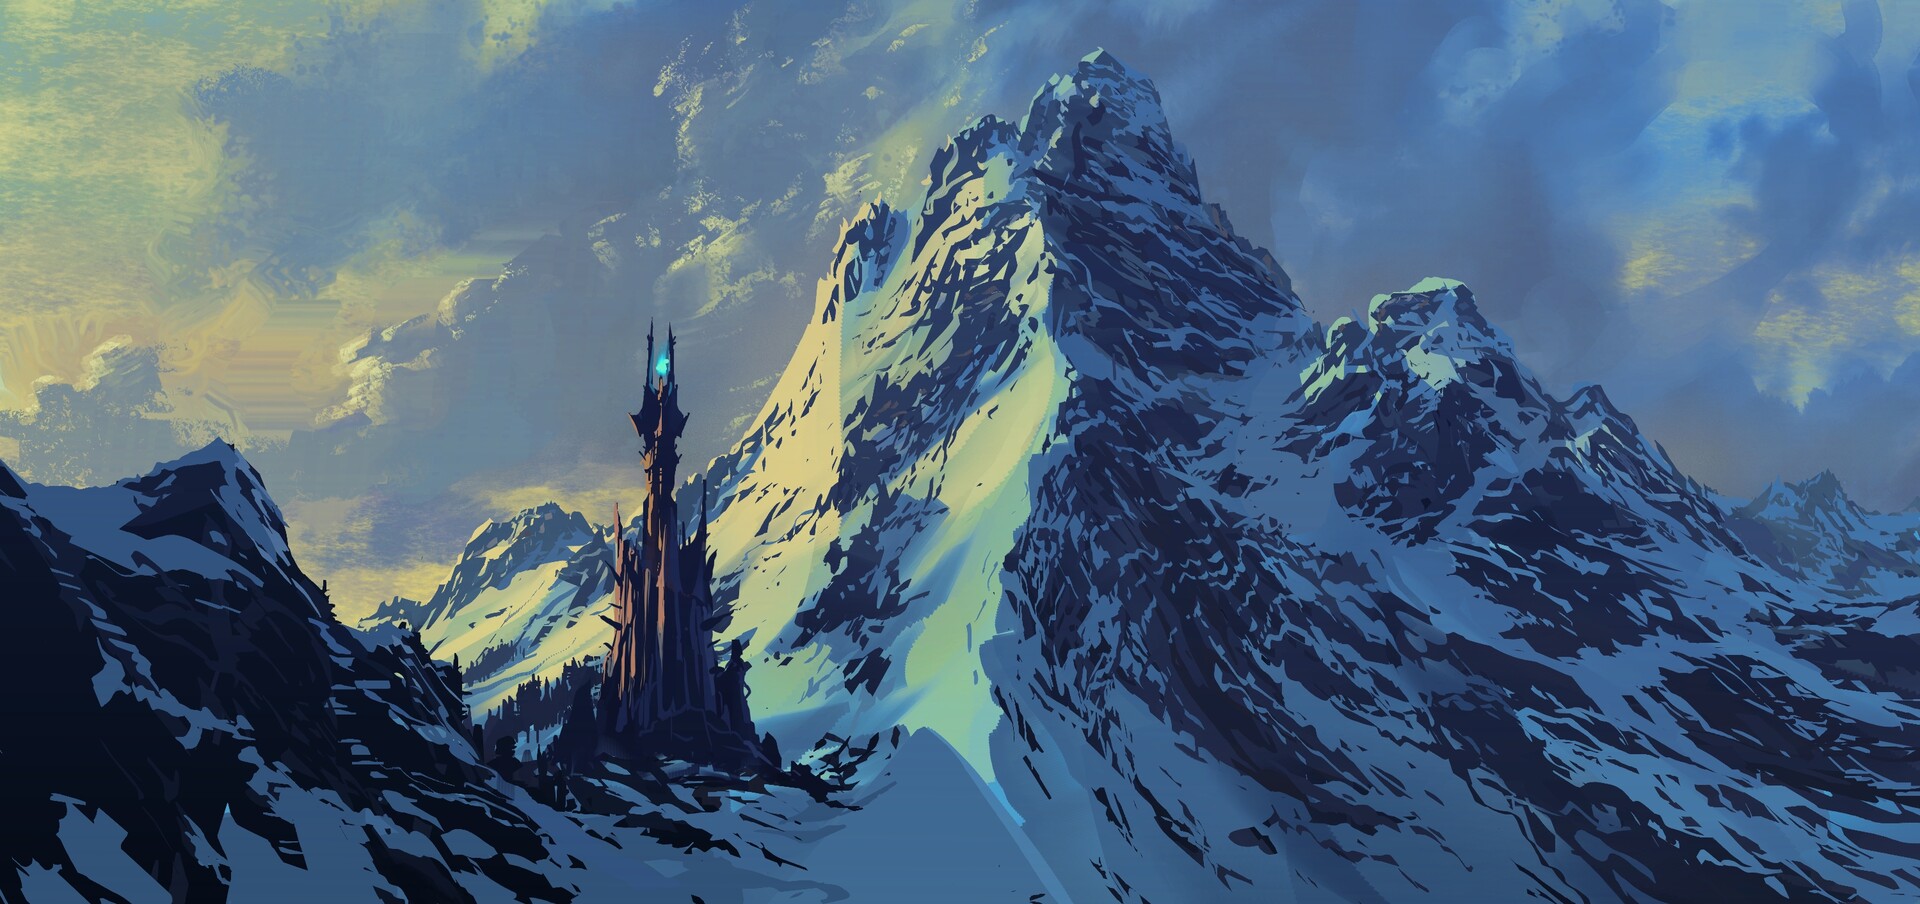 General 1920x904 Philipp A. Ulrich digital art fantasy art snow tower mountains